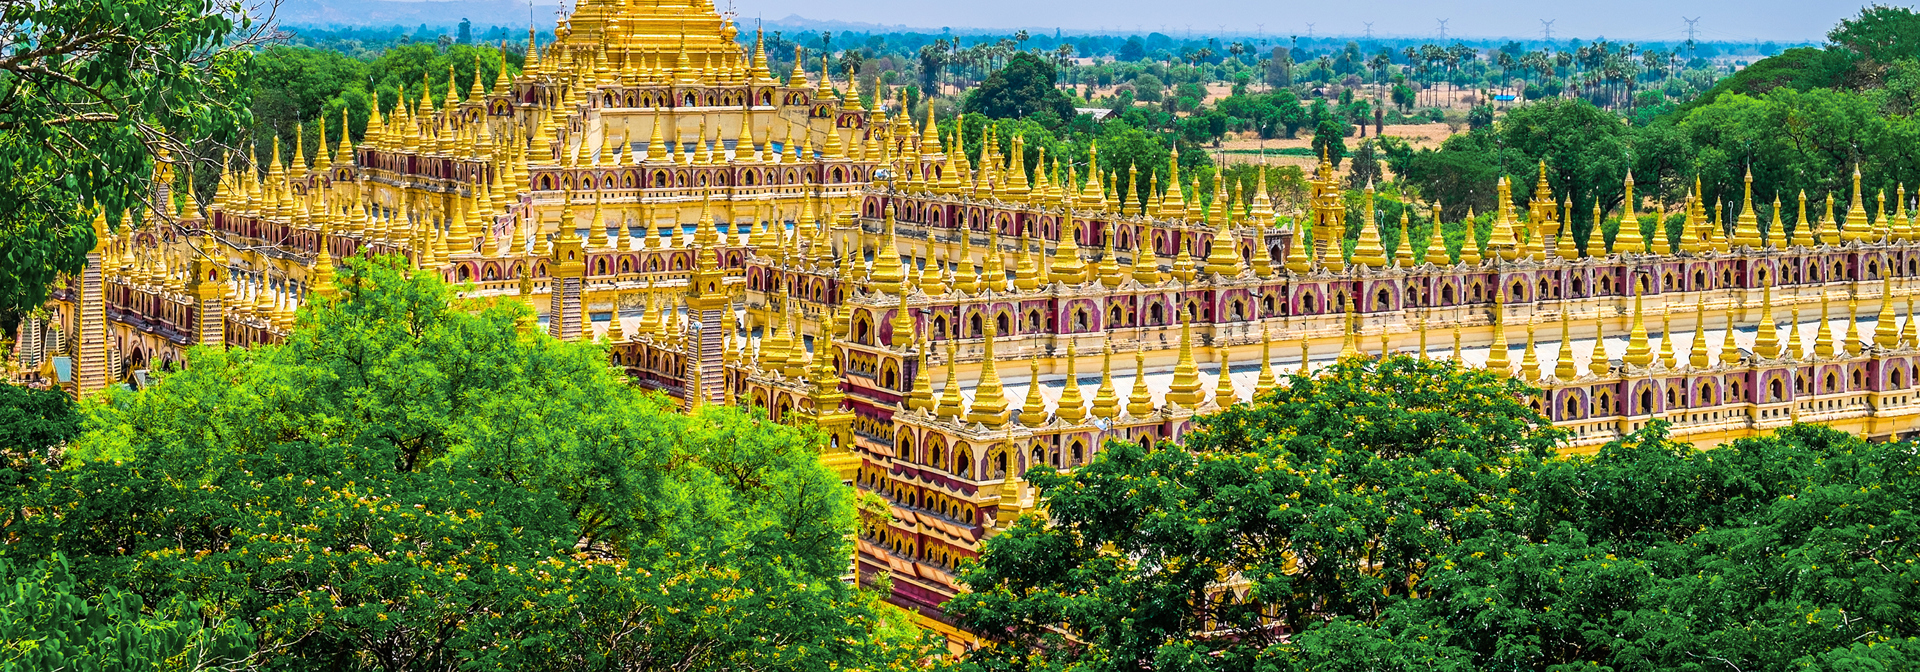 burma - monywa_thanboddhay paya_tempel_02